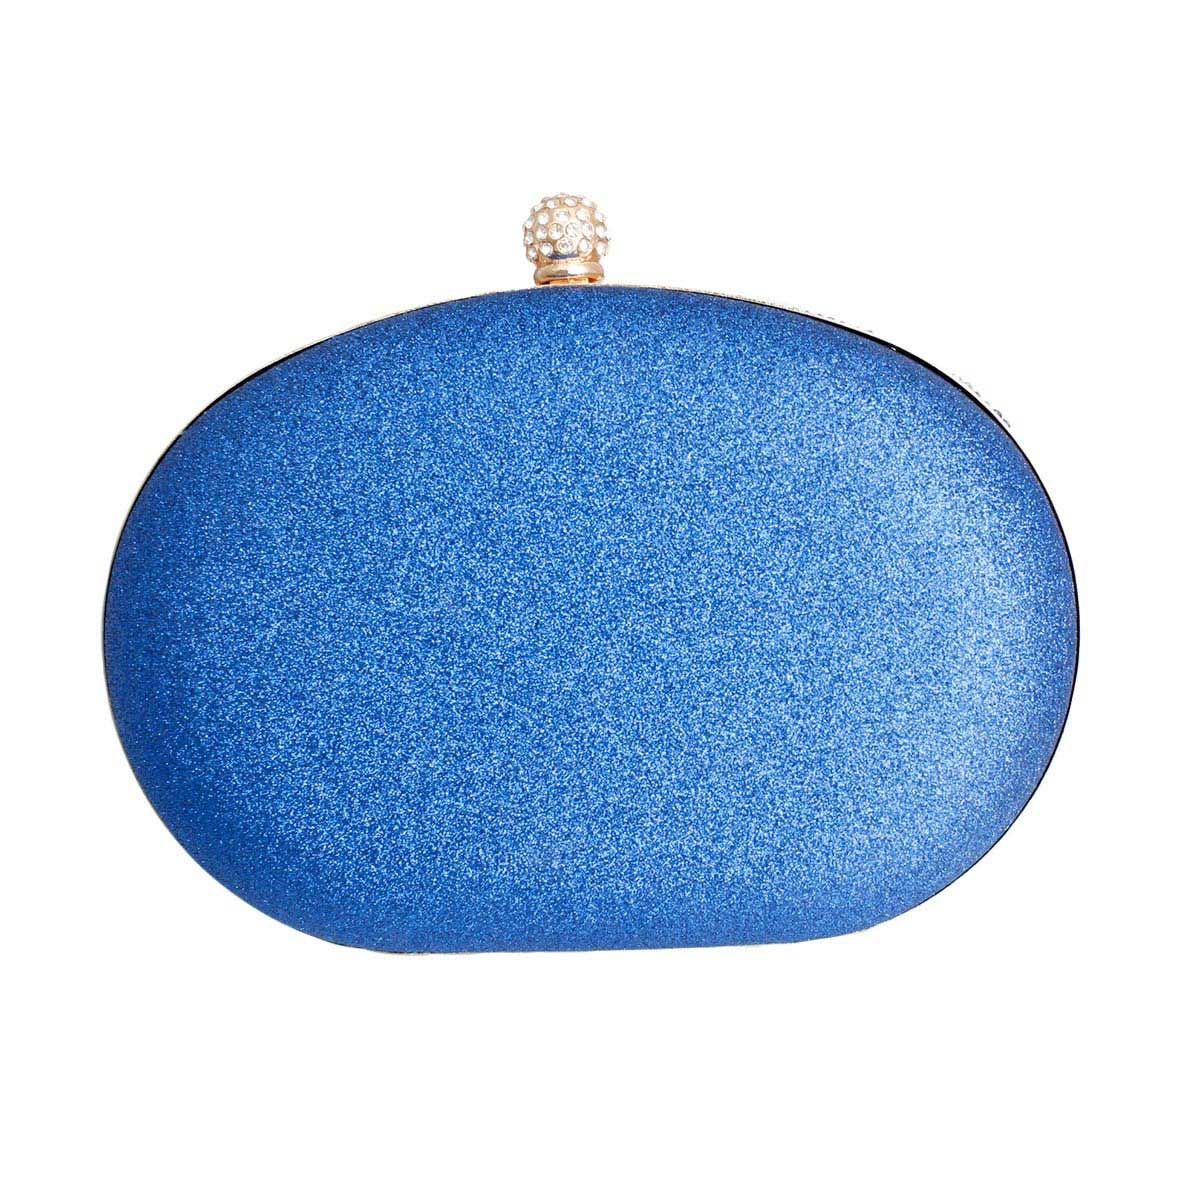 Clutch Blue Crystal Hard Case Bag for Women